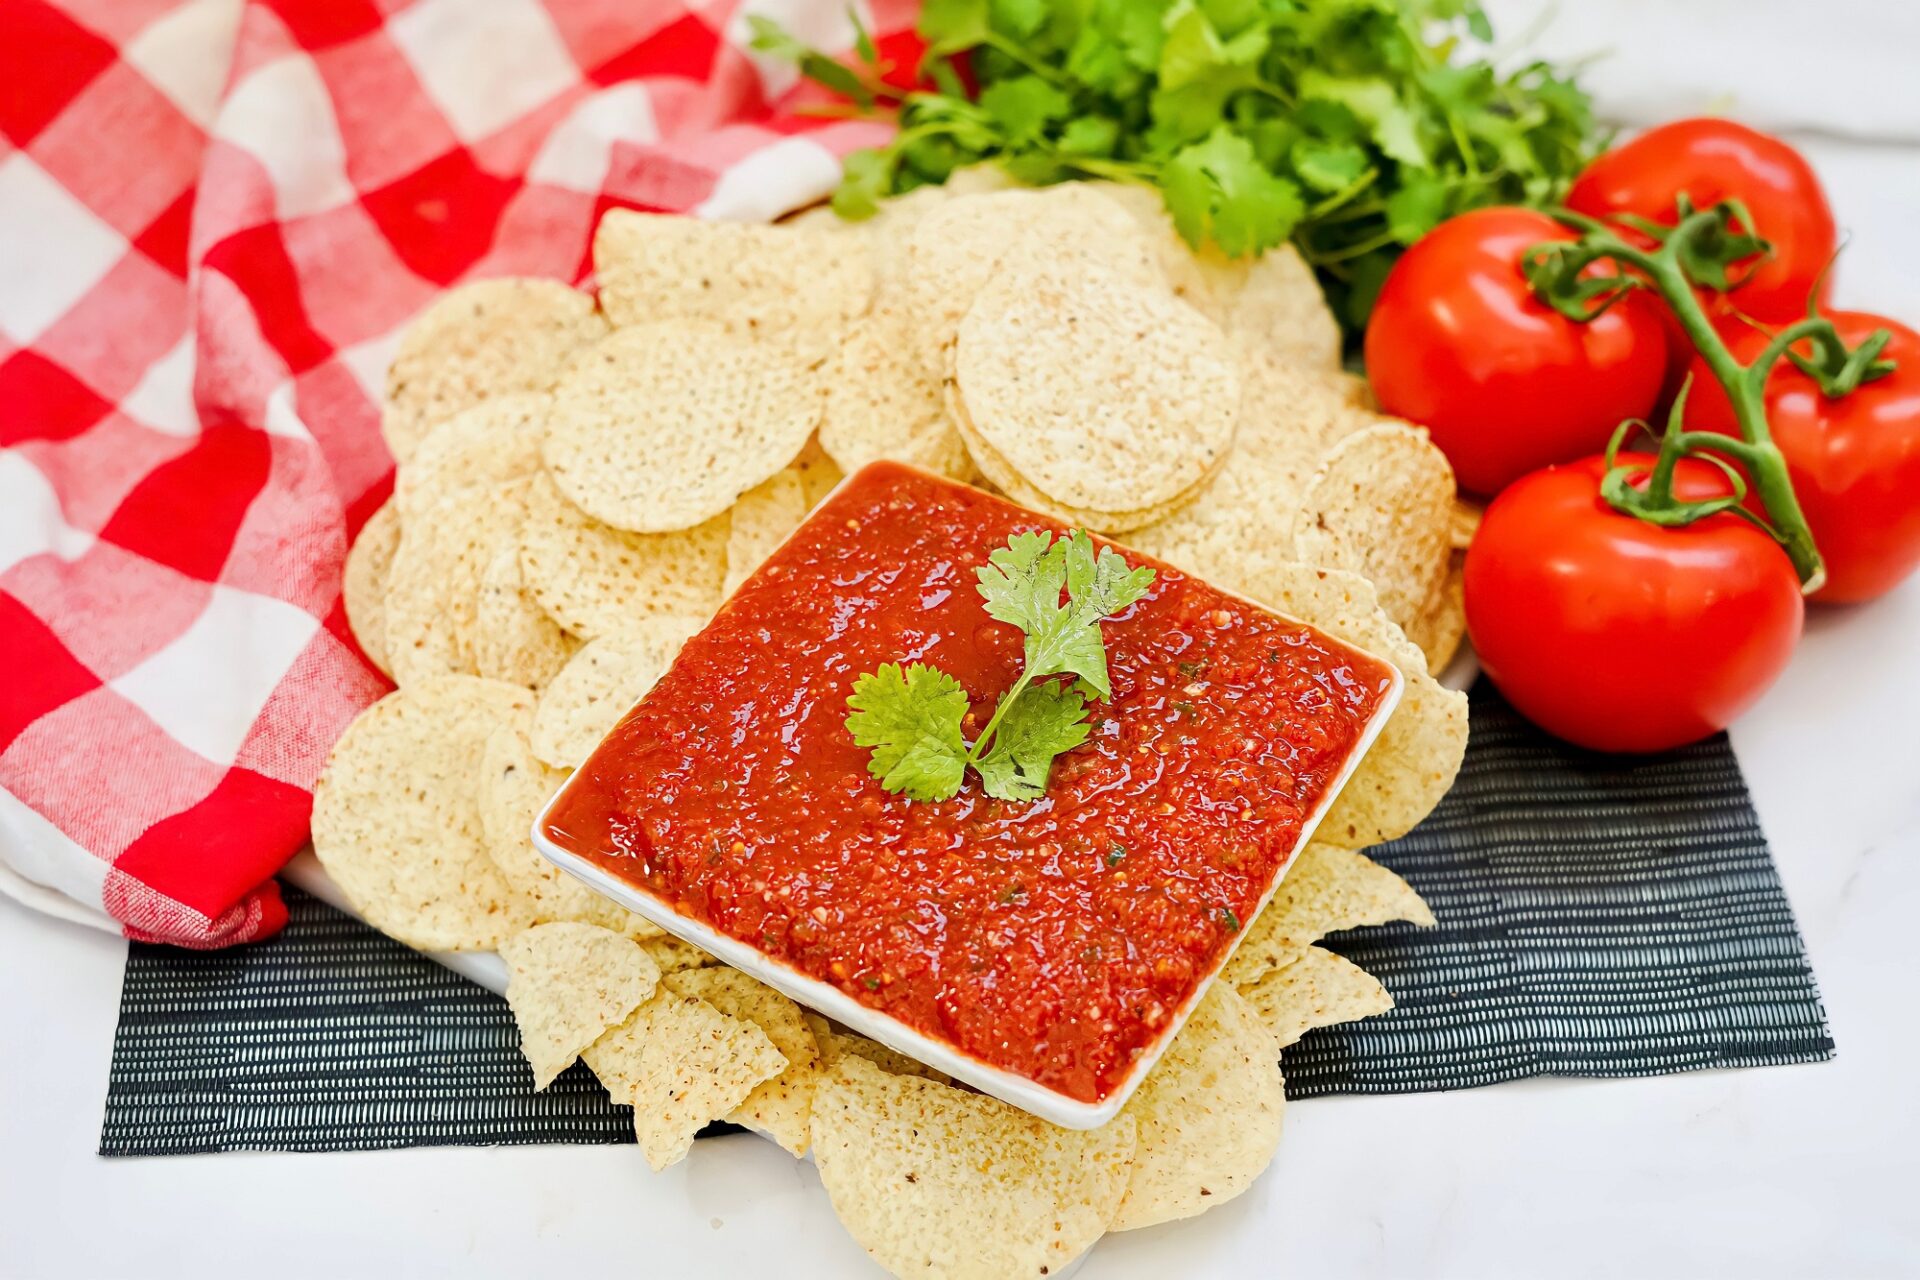 Chili's copycat salsa.